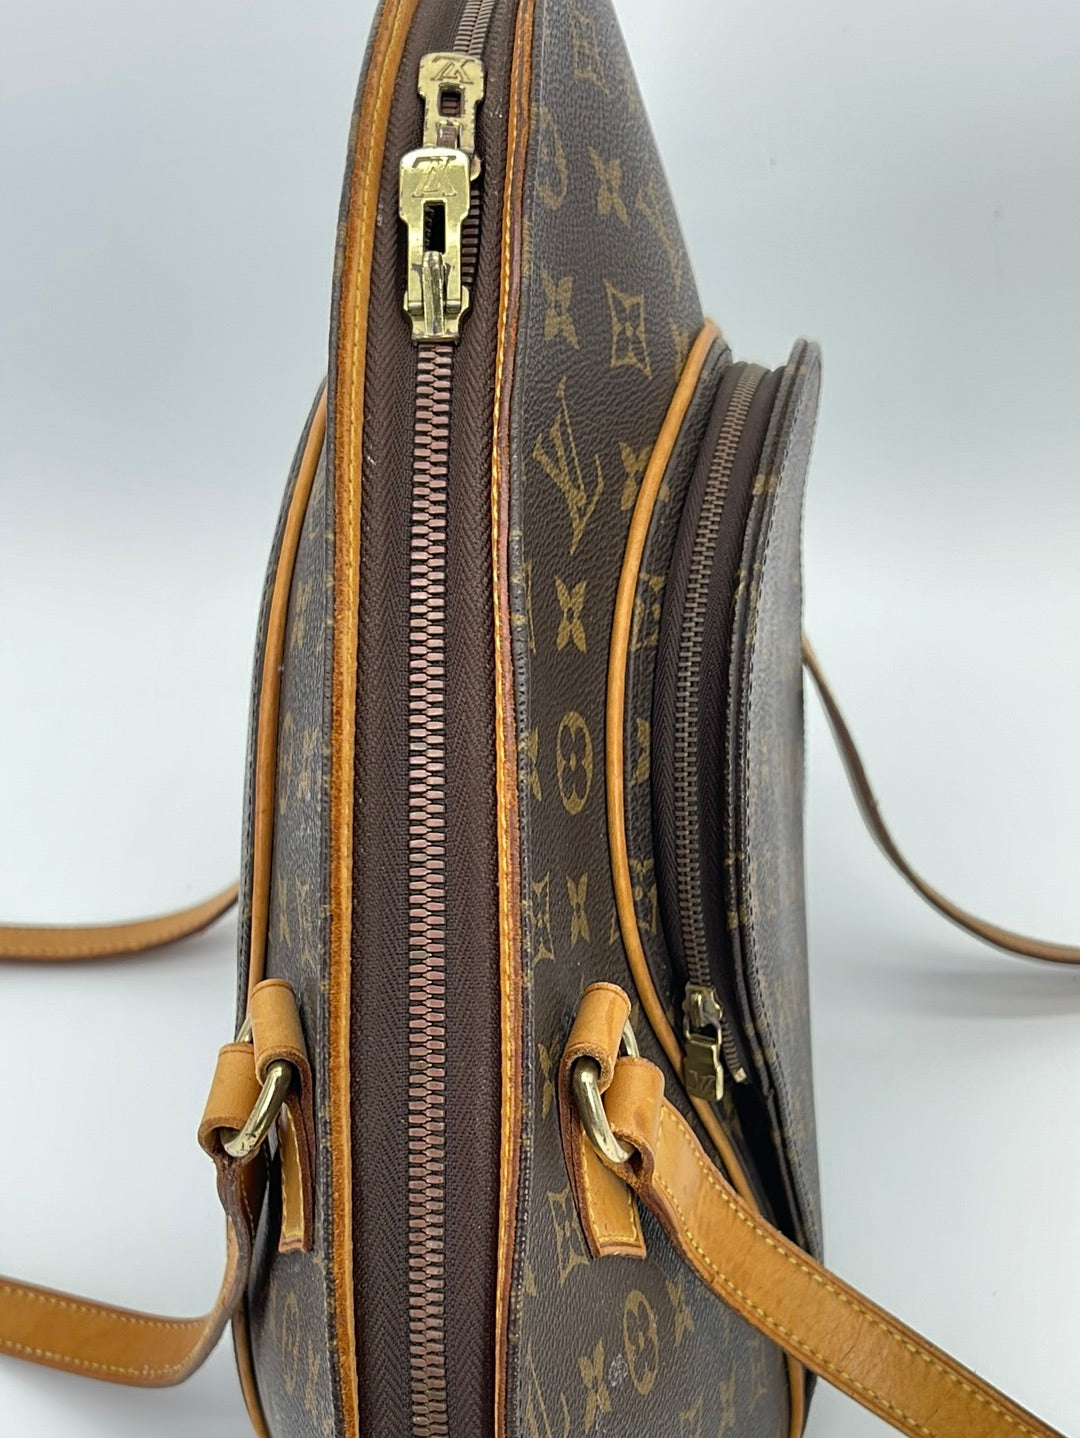 Sold at Auction: Louis Vuitton Ellipse Monogram Backpack